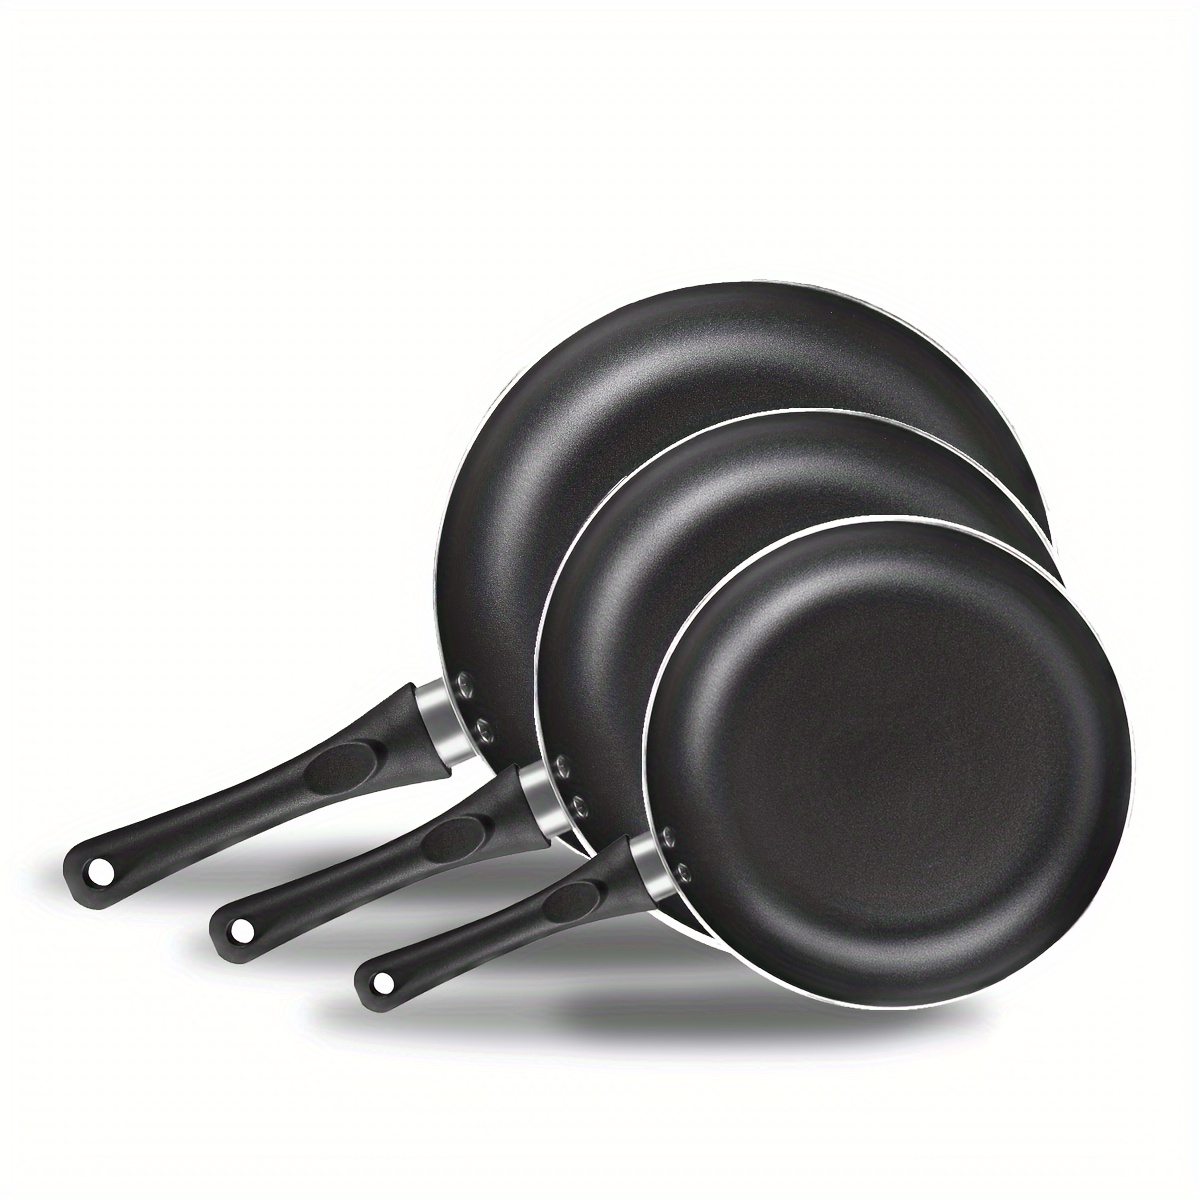 Pots And Pans Set, Aluminum Cookware Set, Nonstick Coating, Fry Pan,  Stockpot With Lid, Black - Temu